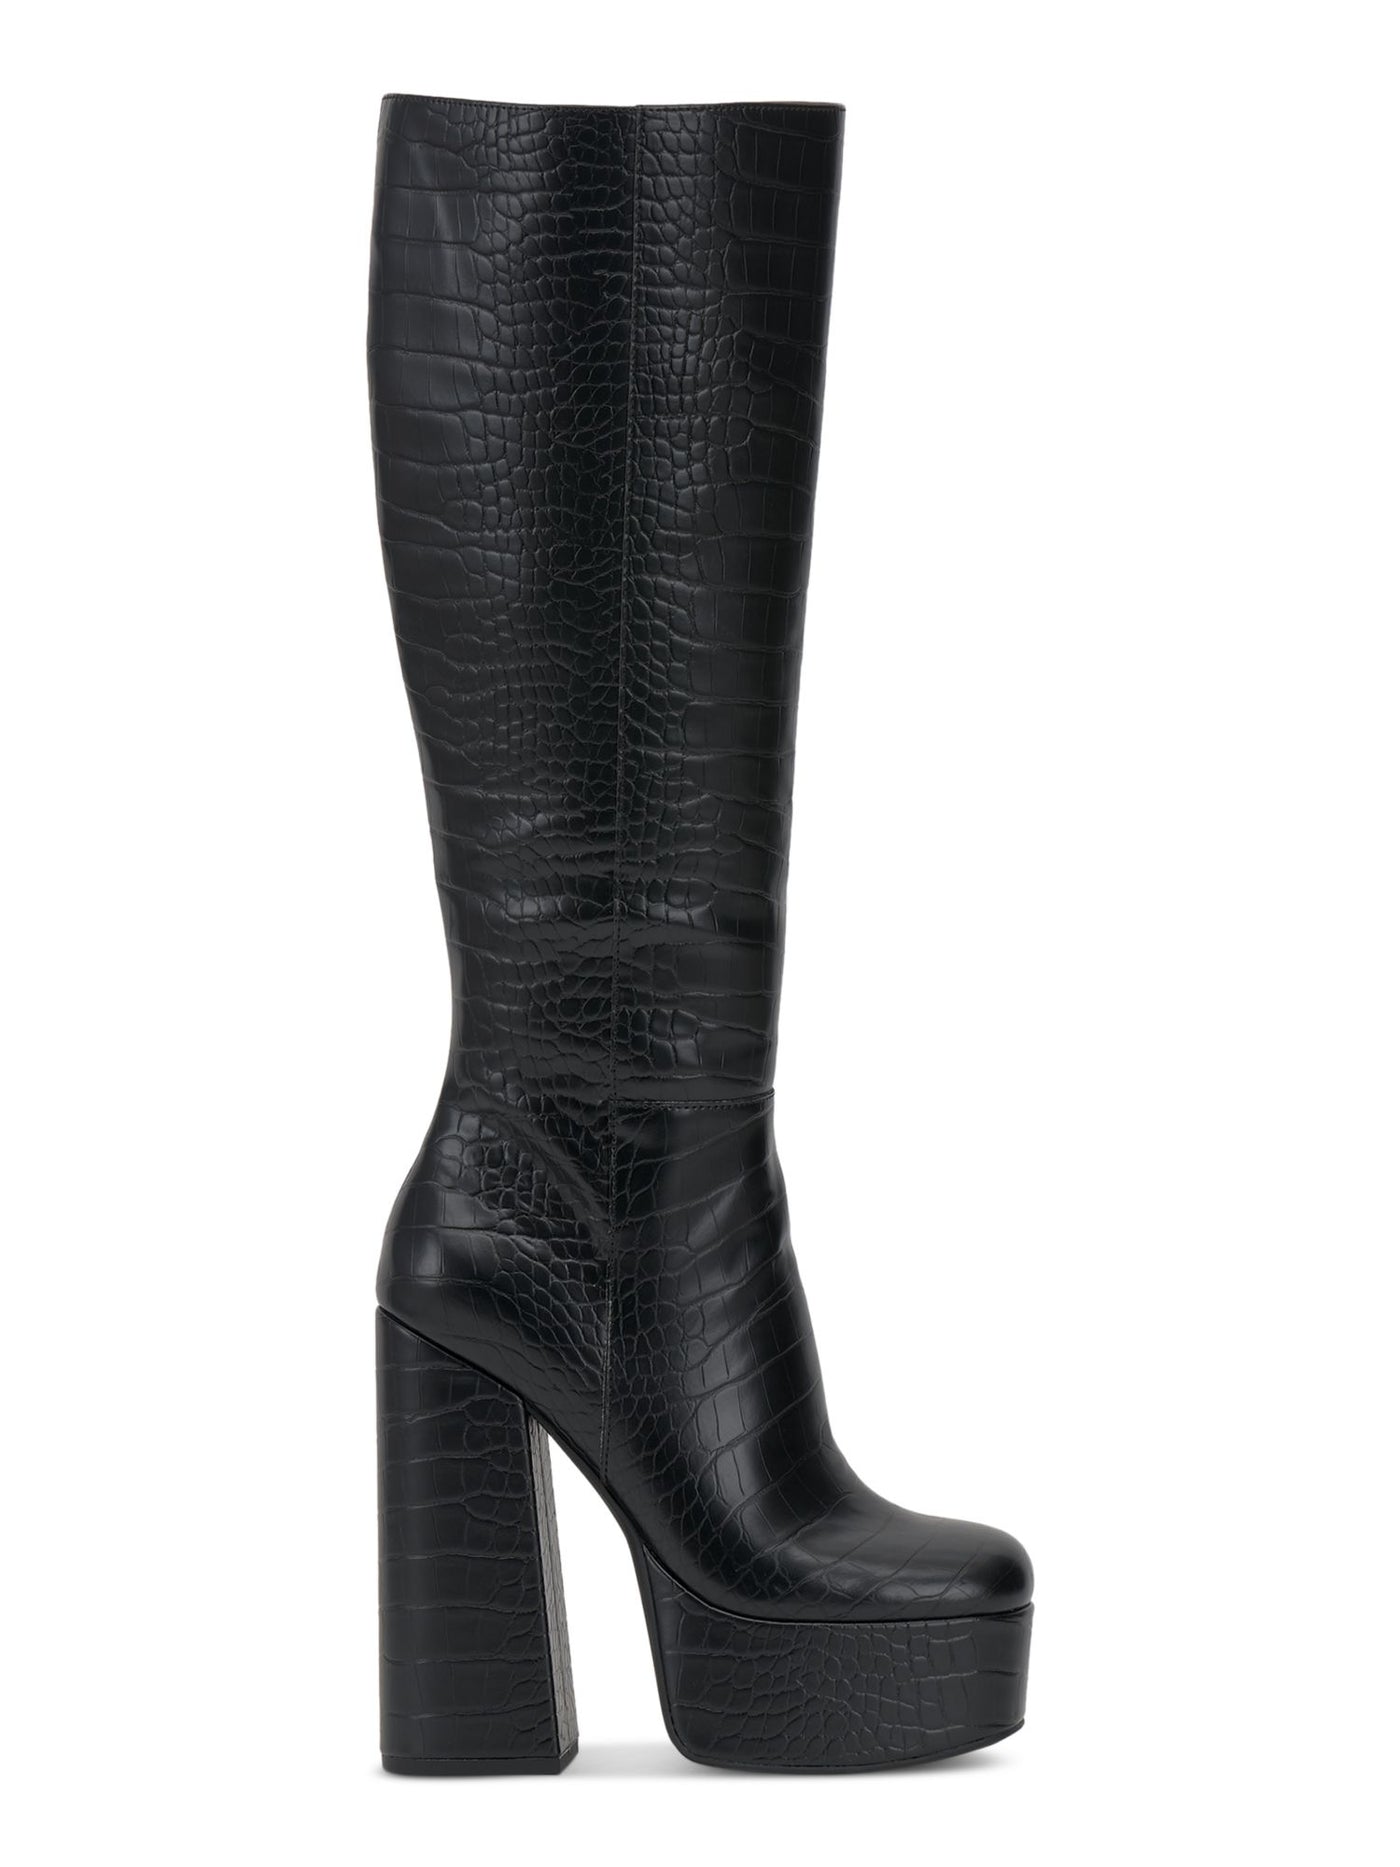 JESSICA SIMPSON Womens Black Animal Print 2 Inch Platform Goring Padded Samah Square Toe Block Heel Zip-Up Dress Boots 9.5 M